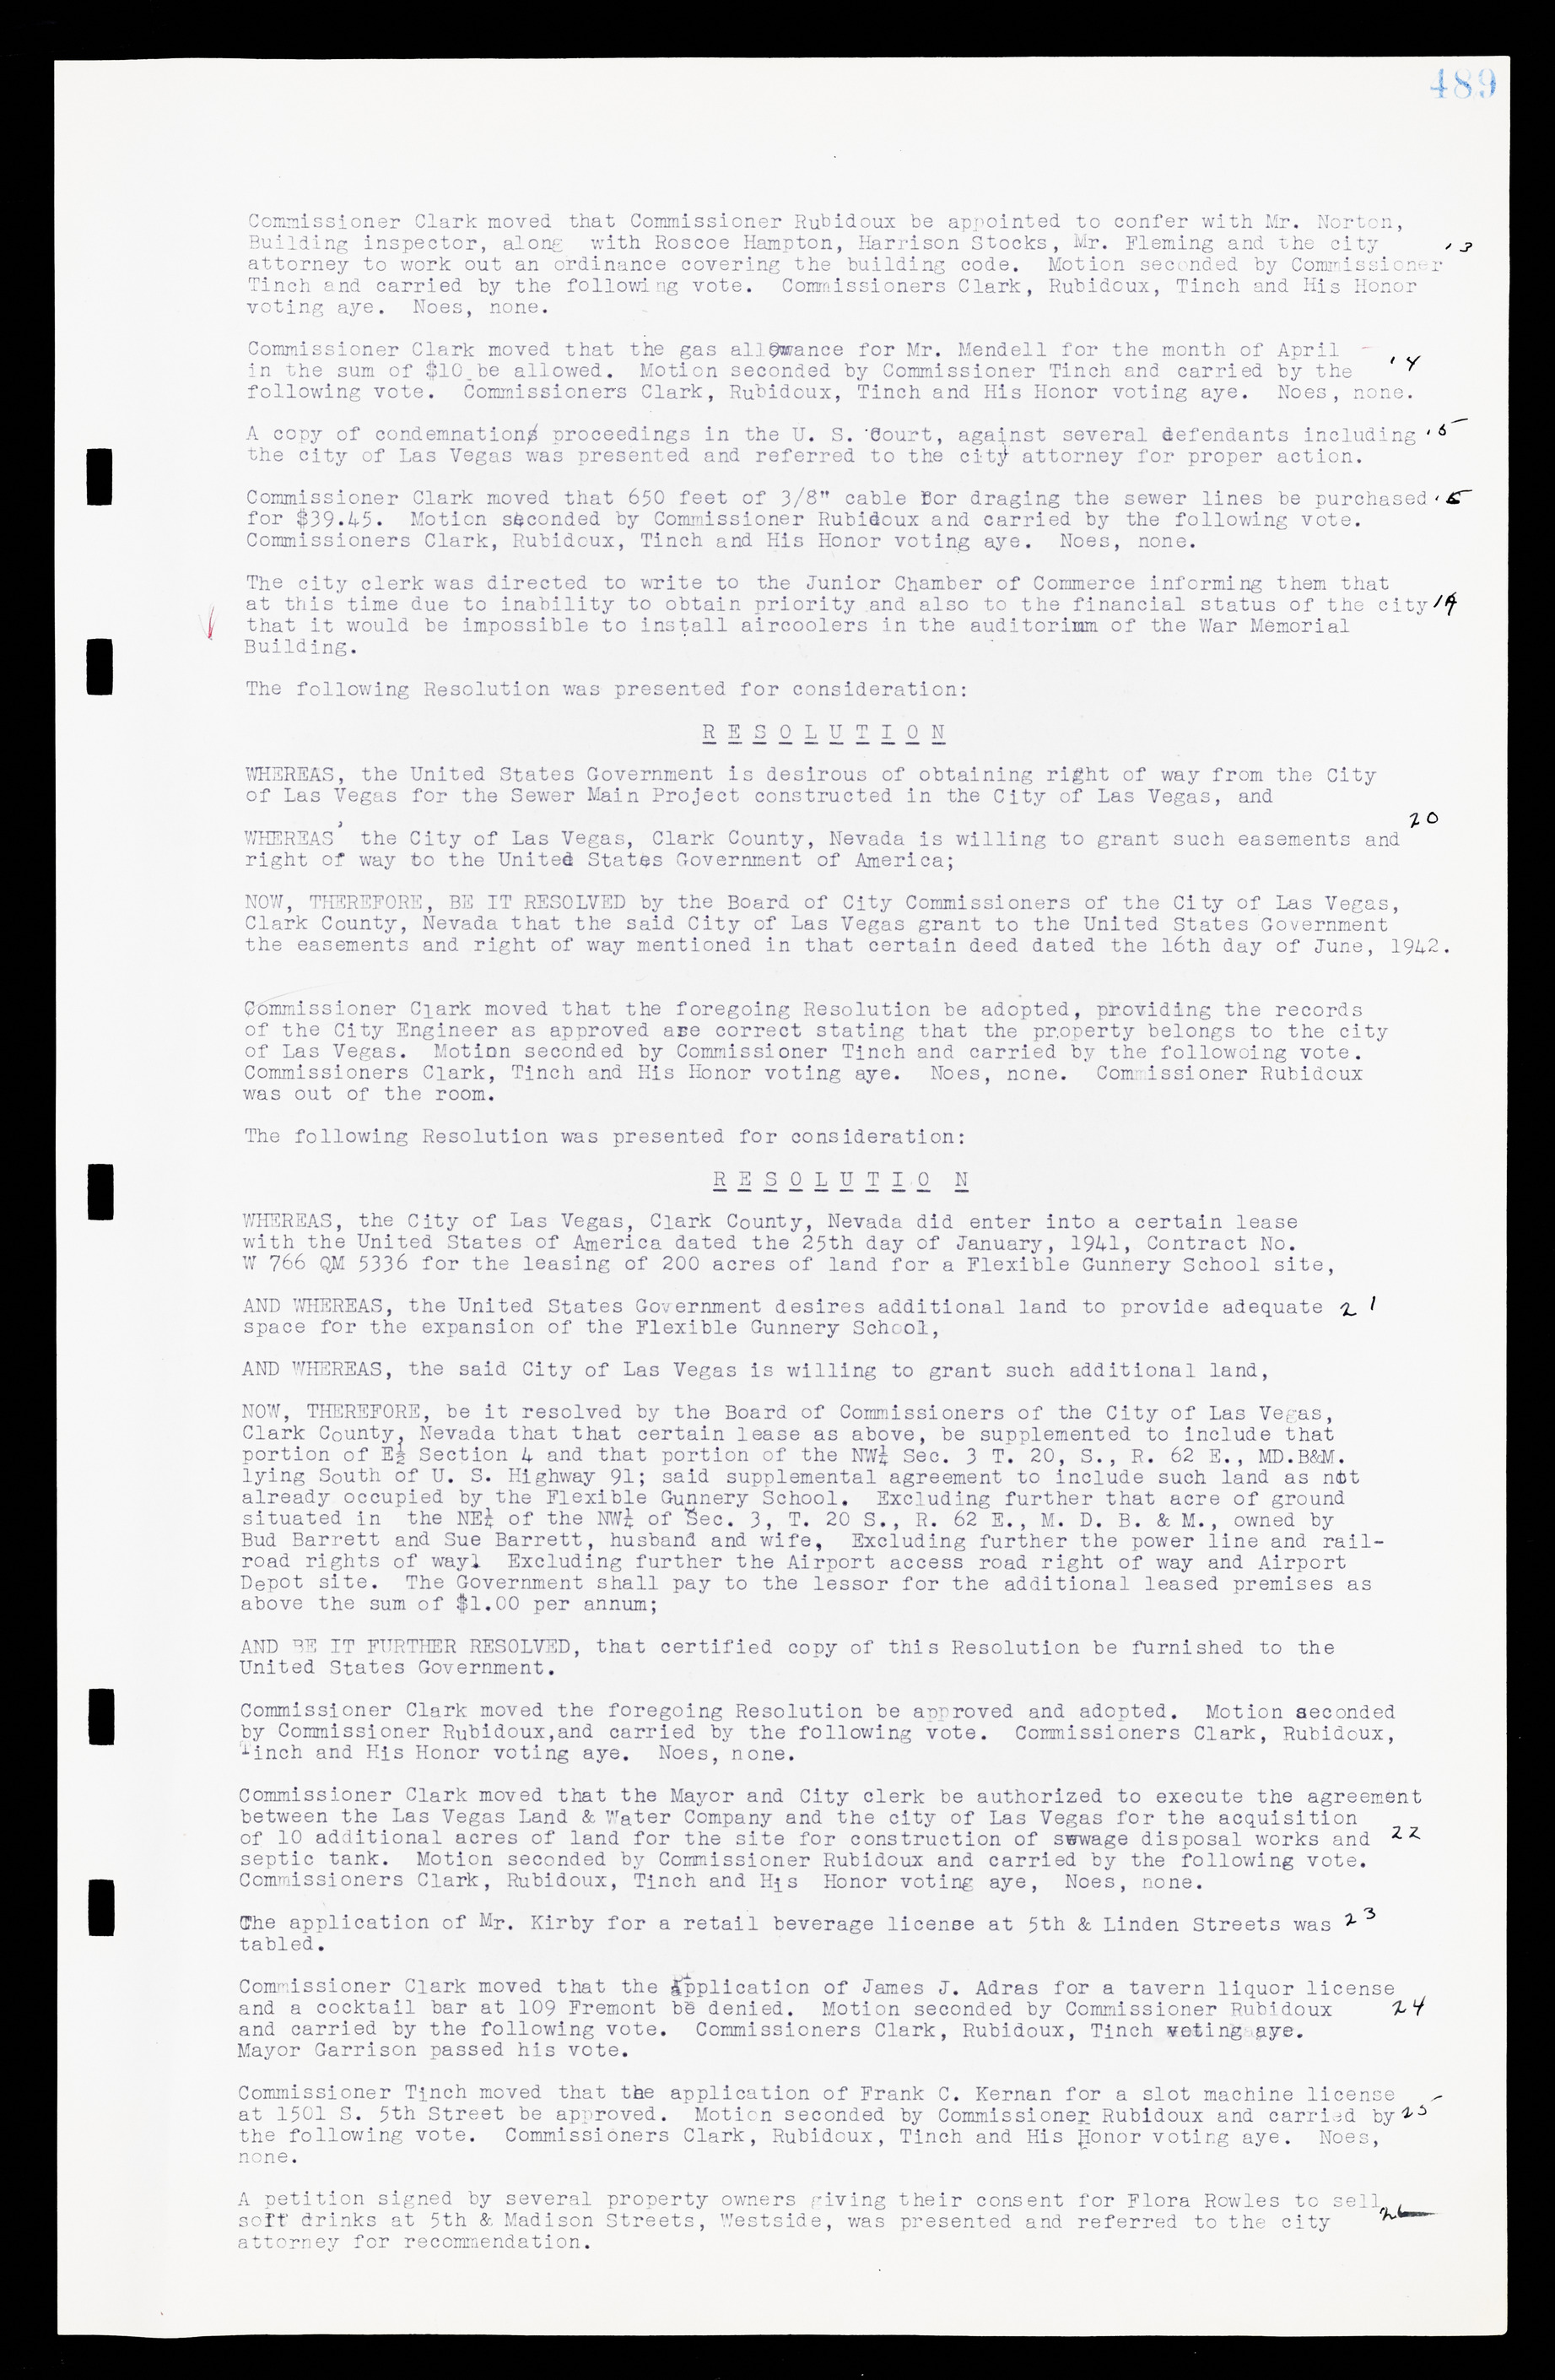 Las Vegas City Commission Minutes, February 17, 1937 to August 4, 1942, lvc000004-517